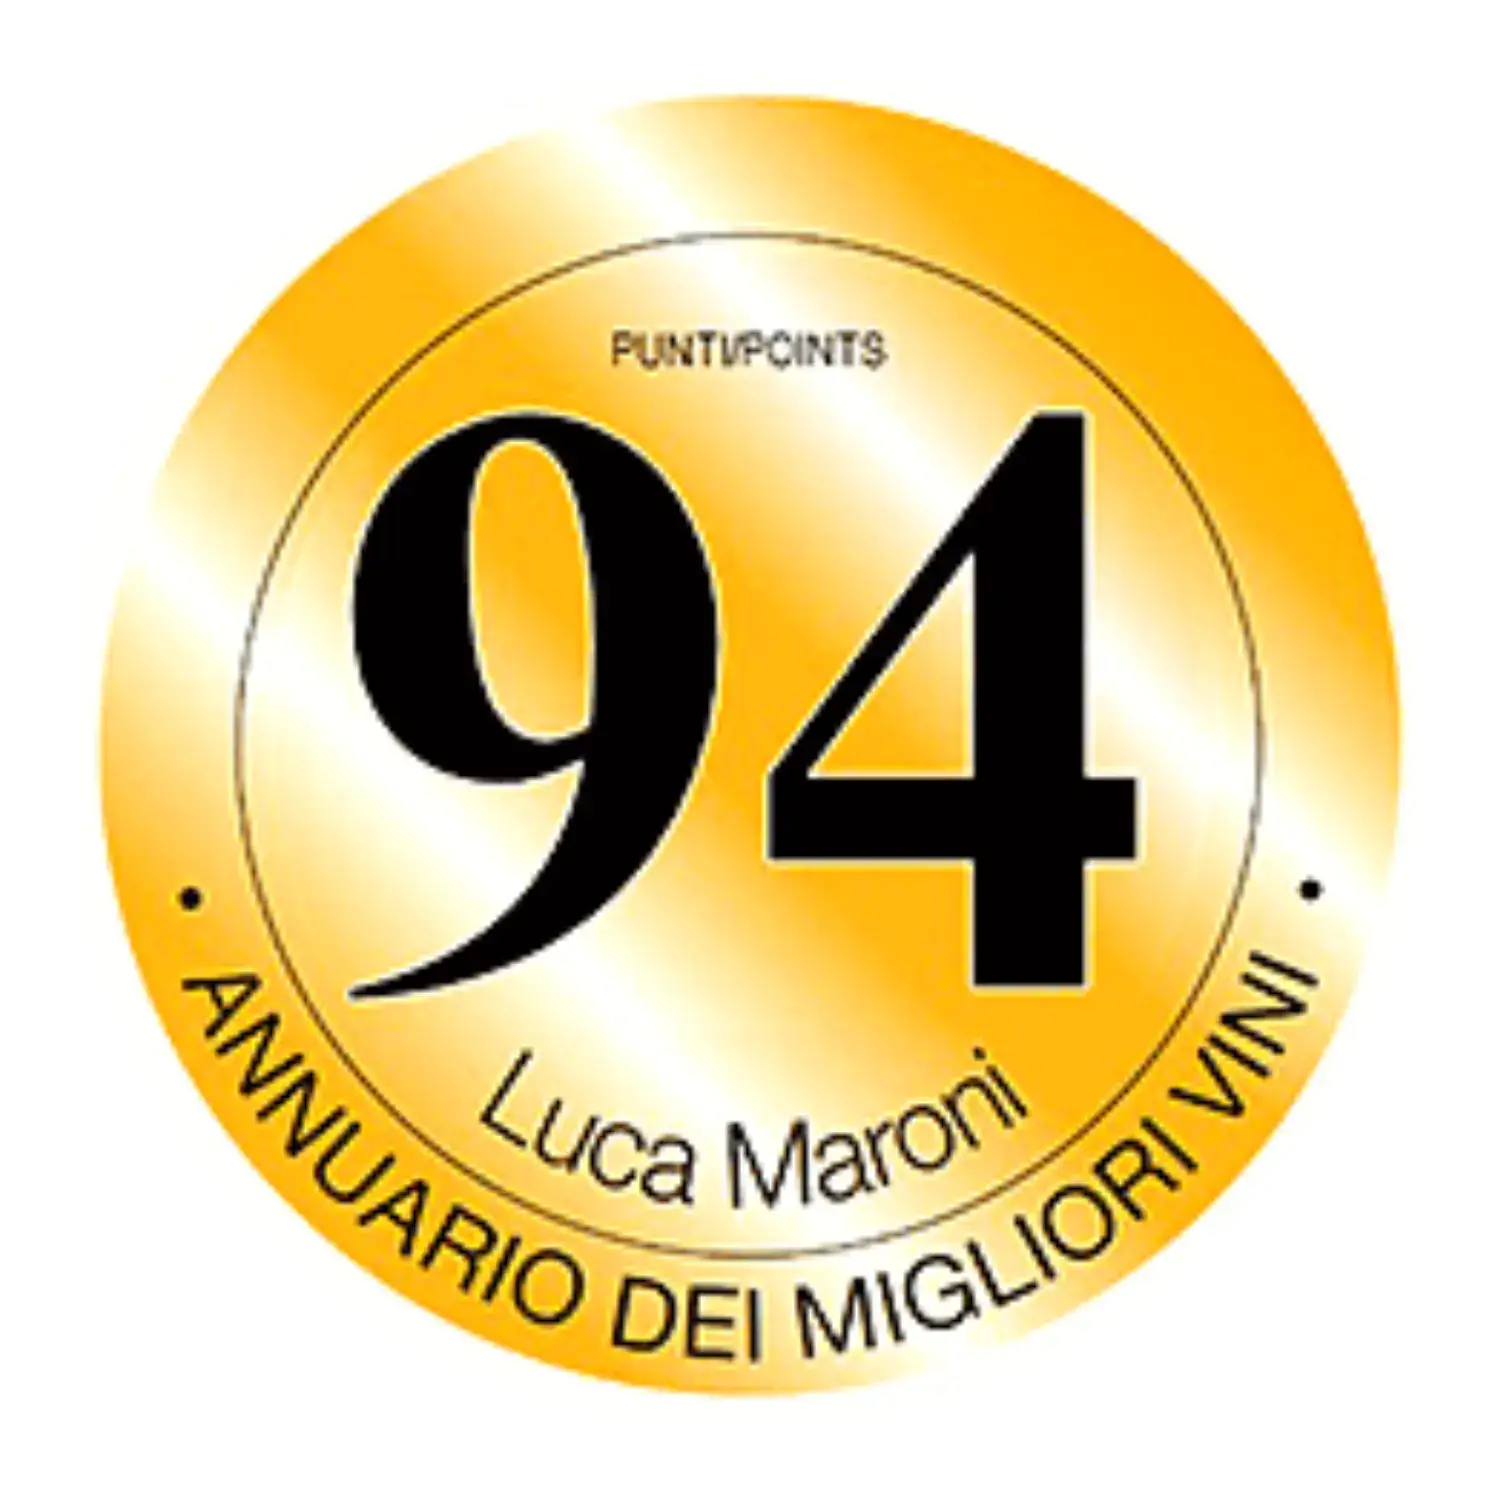 Sigla aurie cu negru pentru premiul Annuario-Dei-Migliori-Vini-Luca-Maroni-94-Puncte